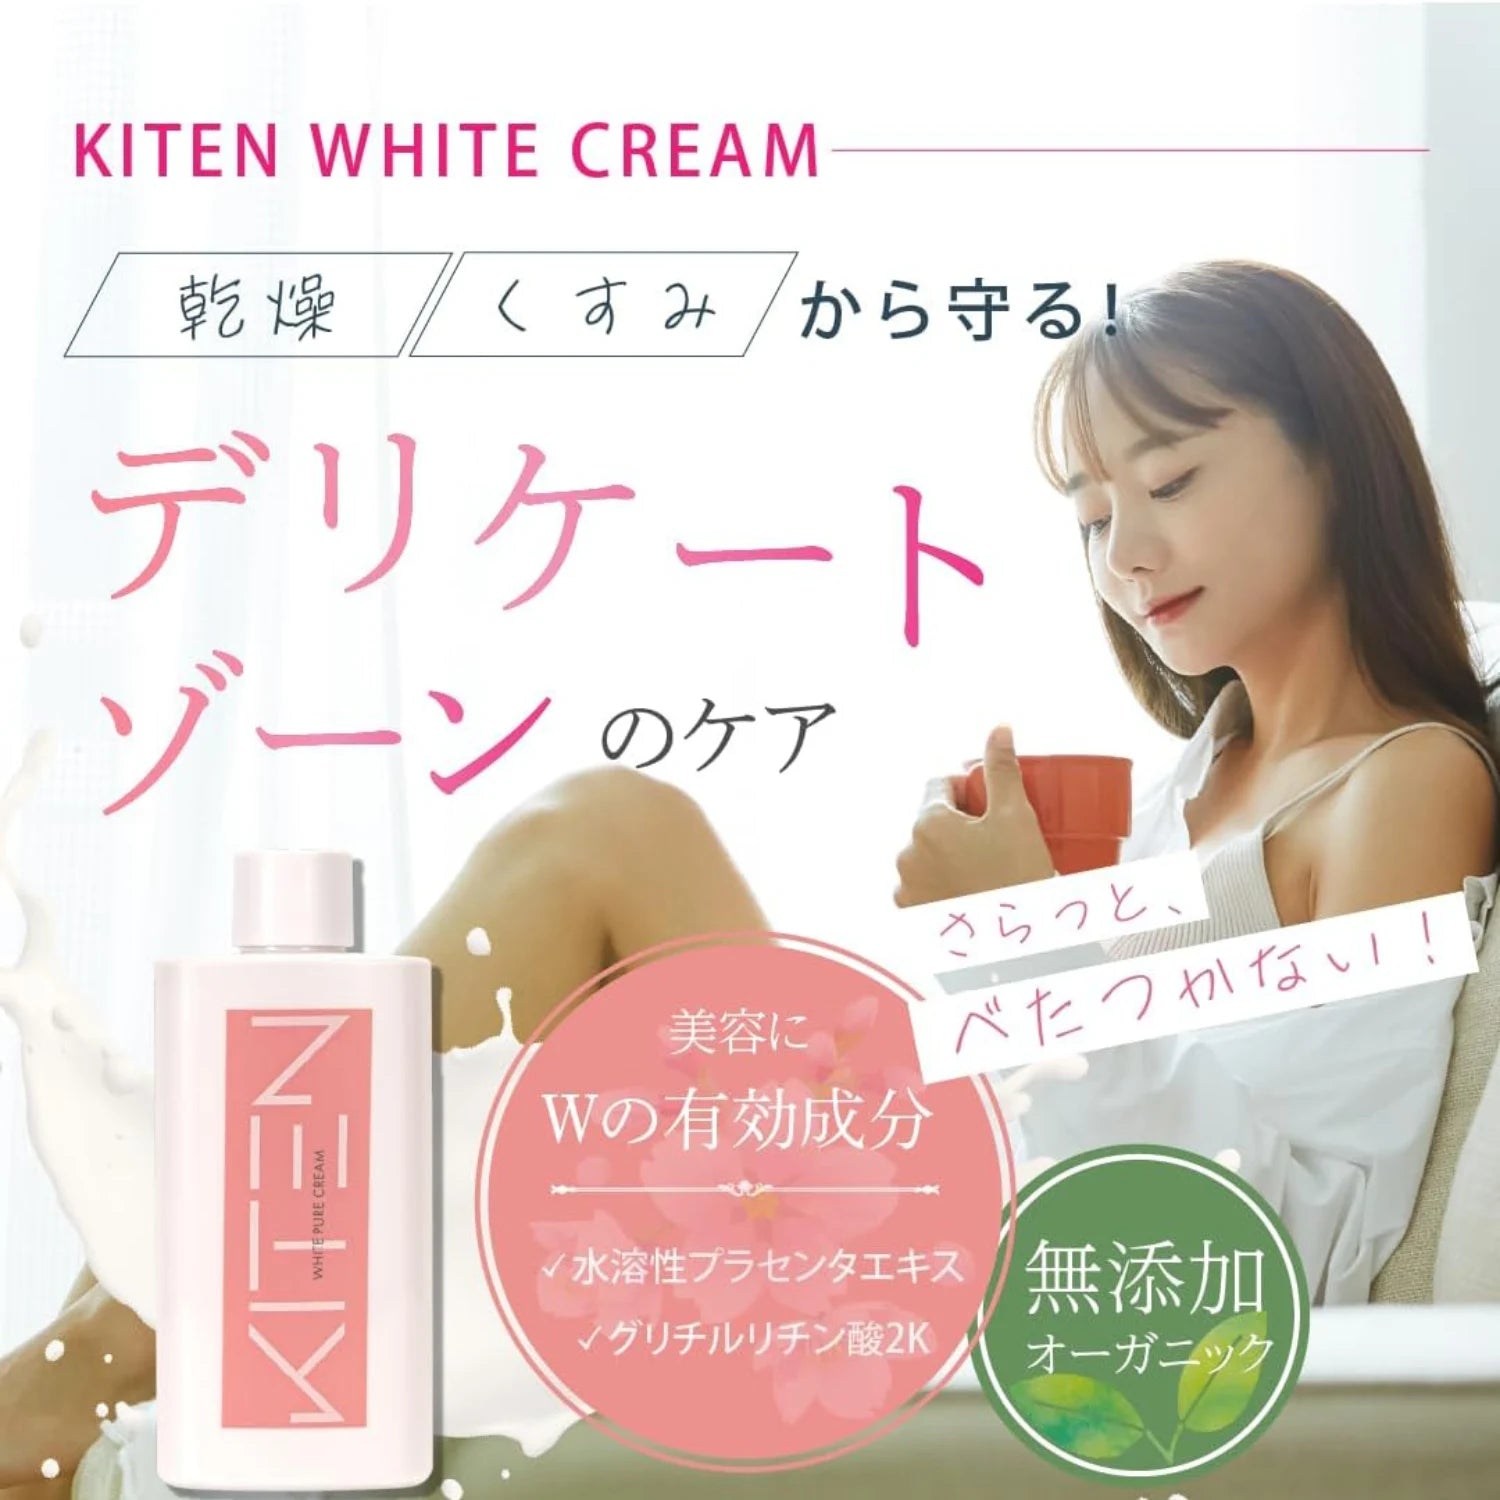 Kiten Pure White Milky Cream 100ml - Buy Me Japan